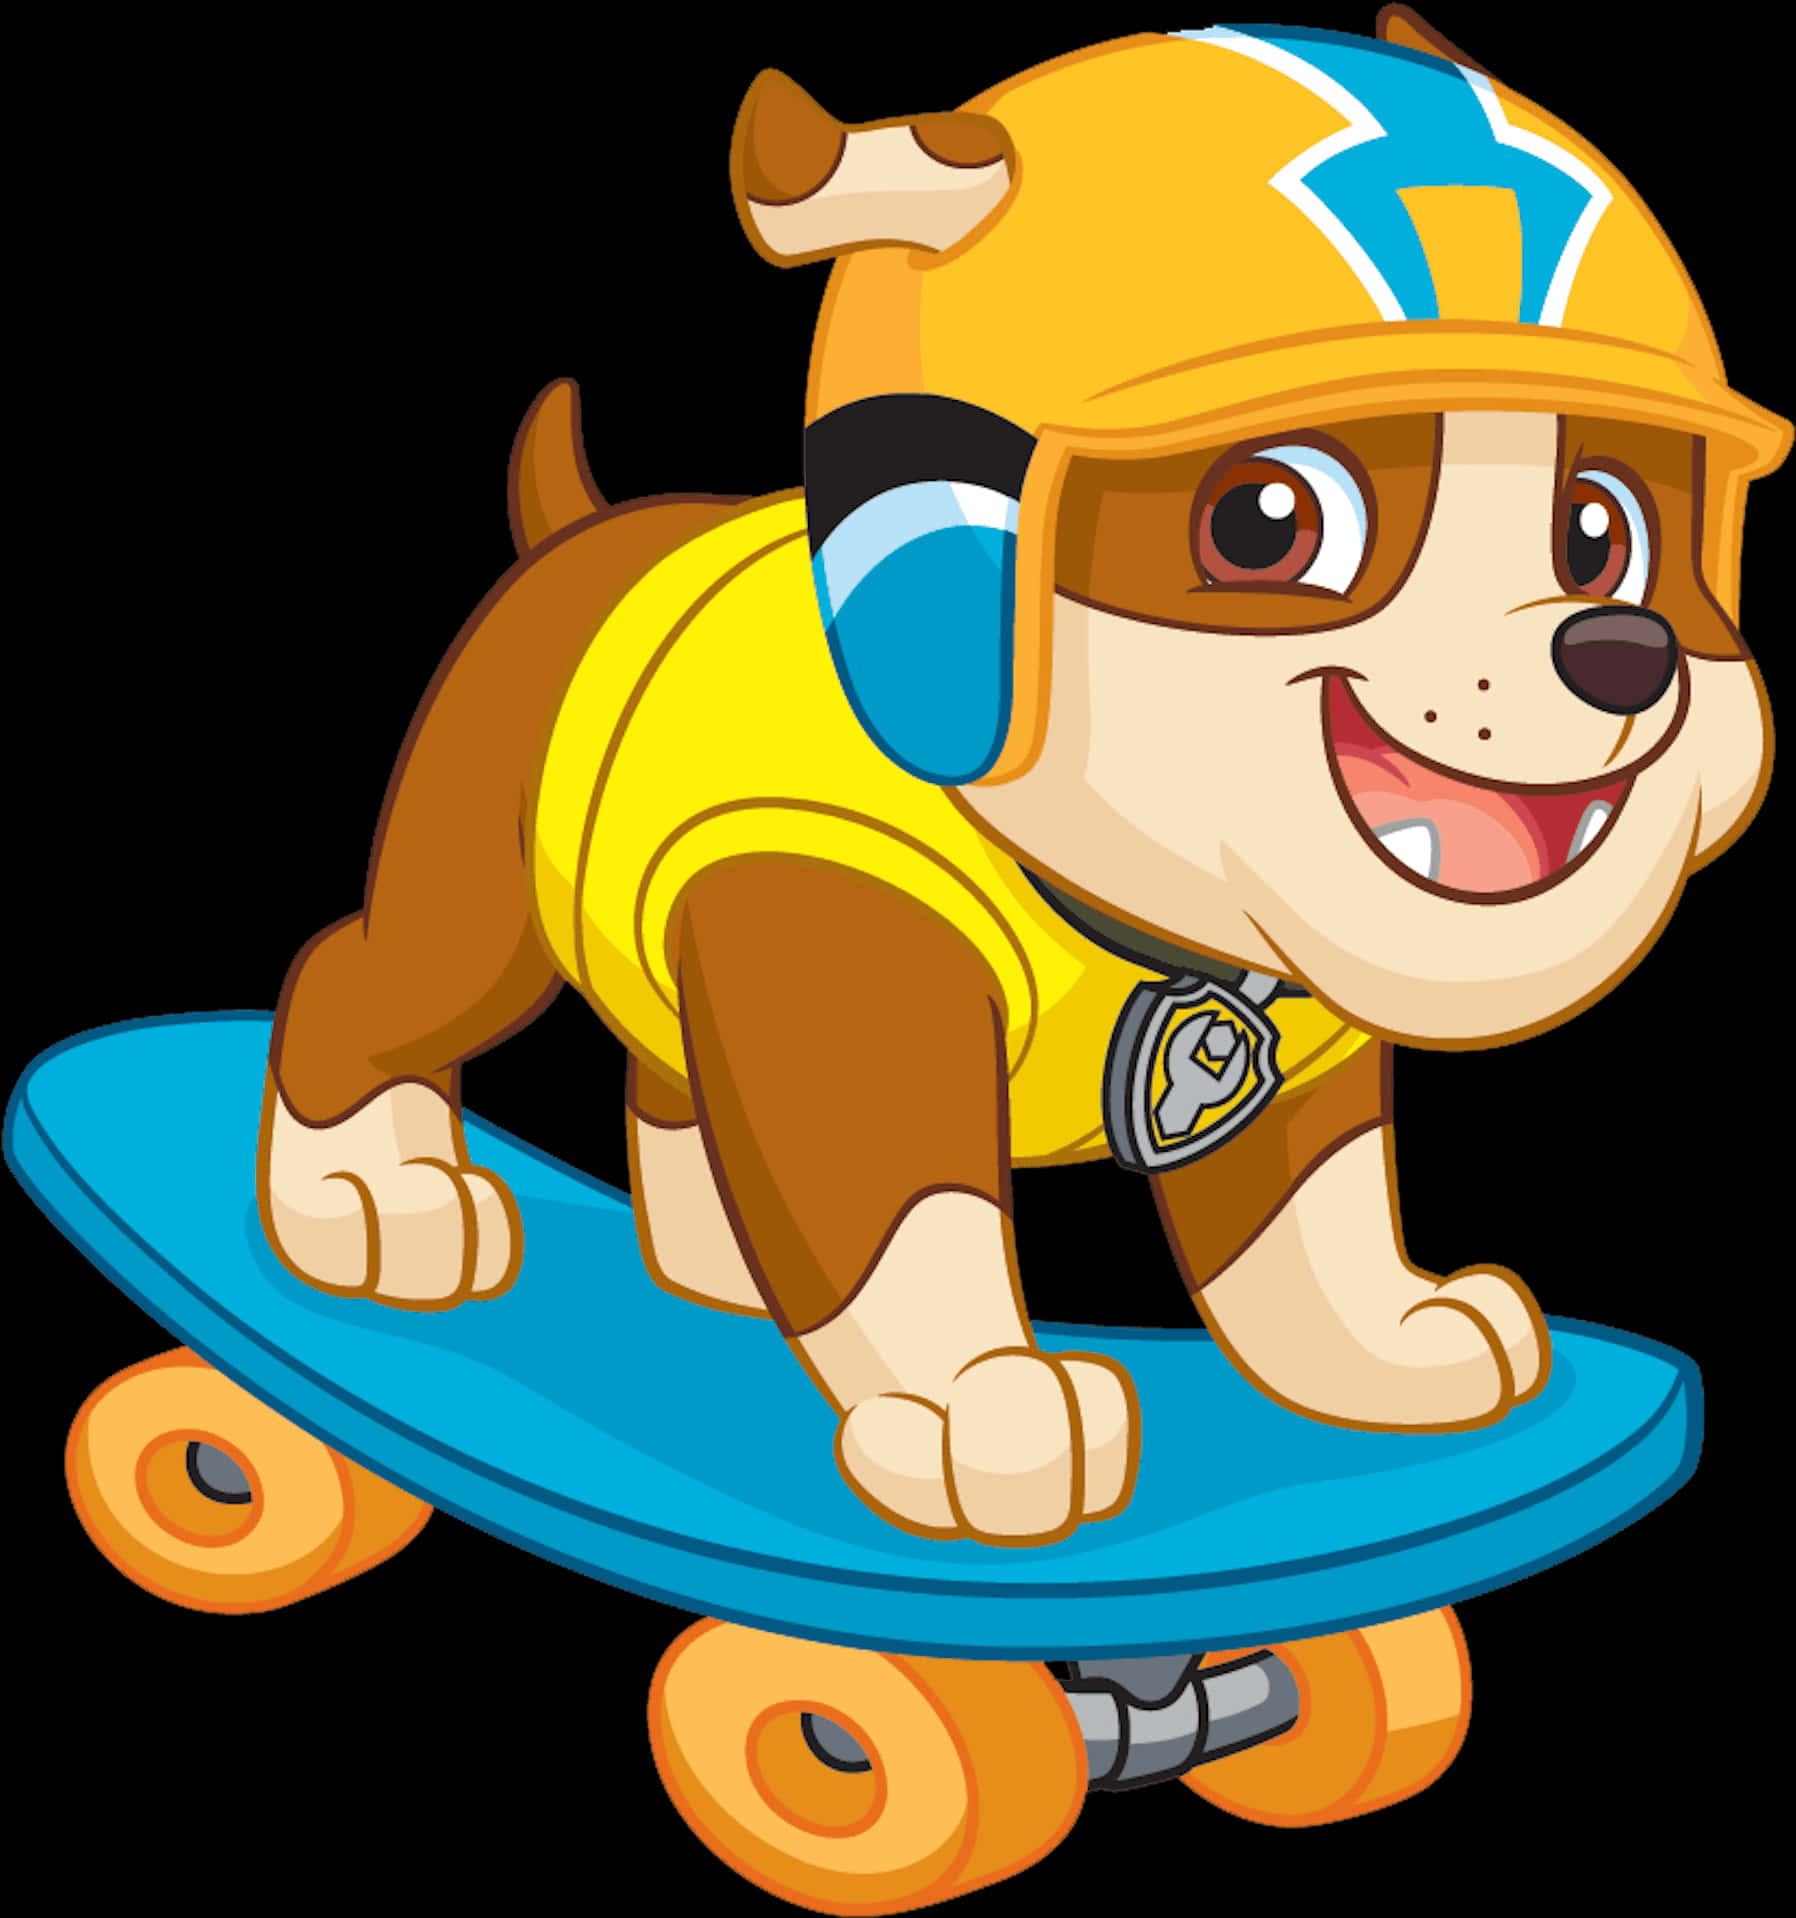 A Cartoon Dog Wearing A Helmet And Riding A Skateboard